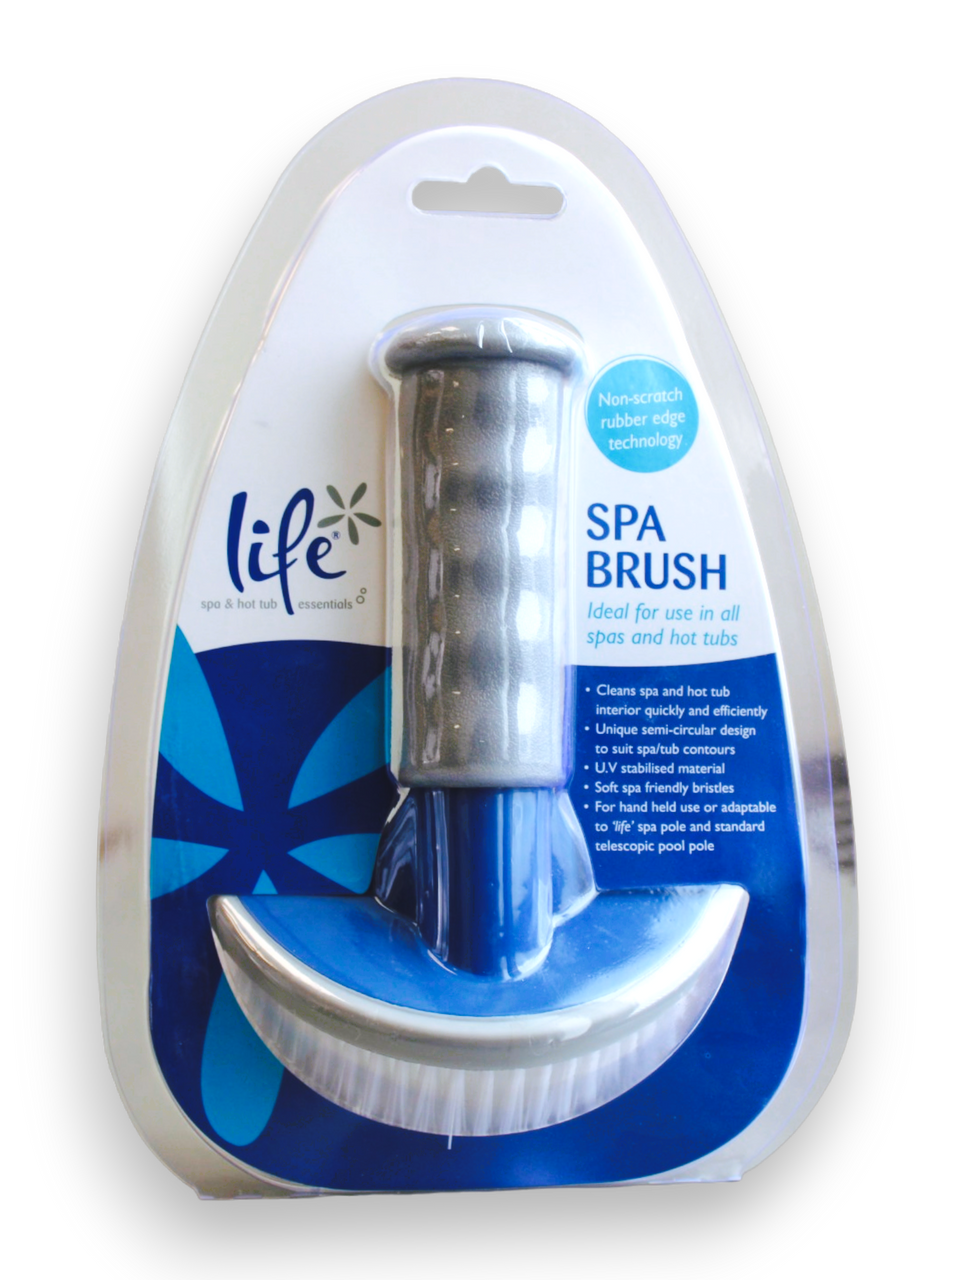 Life Essentials Spa & Hot Tub Cleaning Brush, CBL392